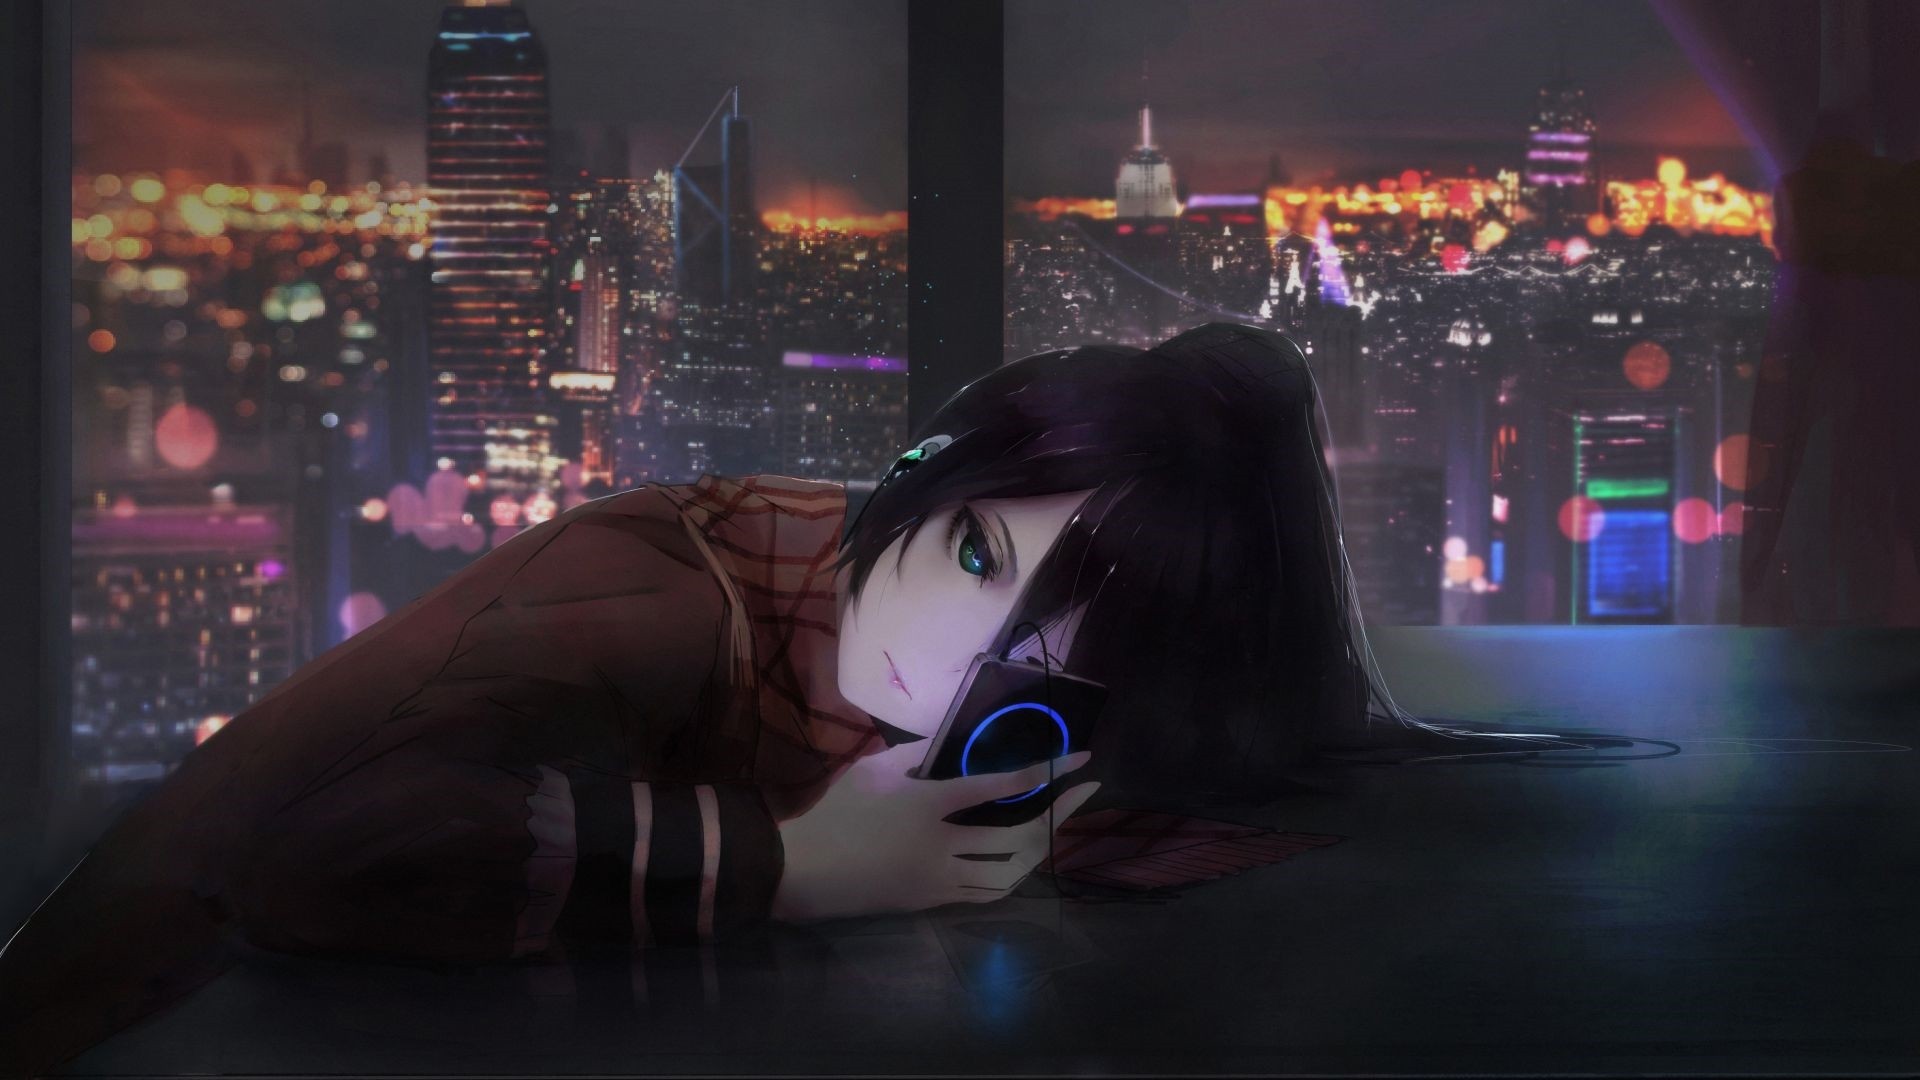 Night Anime Girl Wallpaper image hd